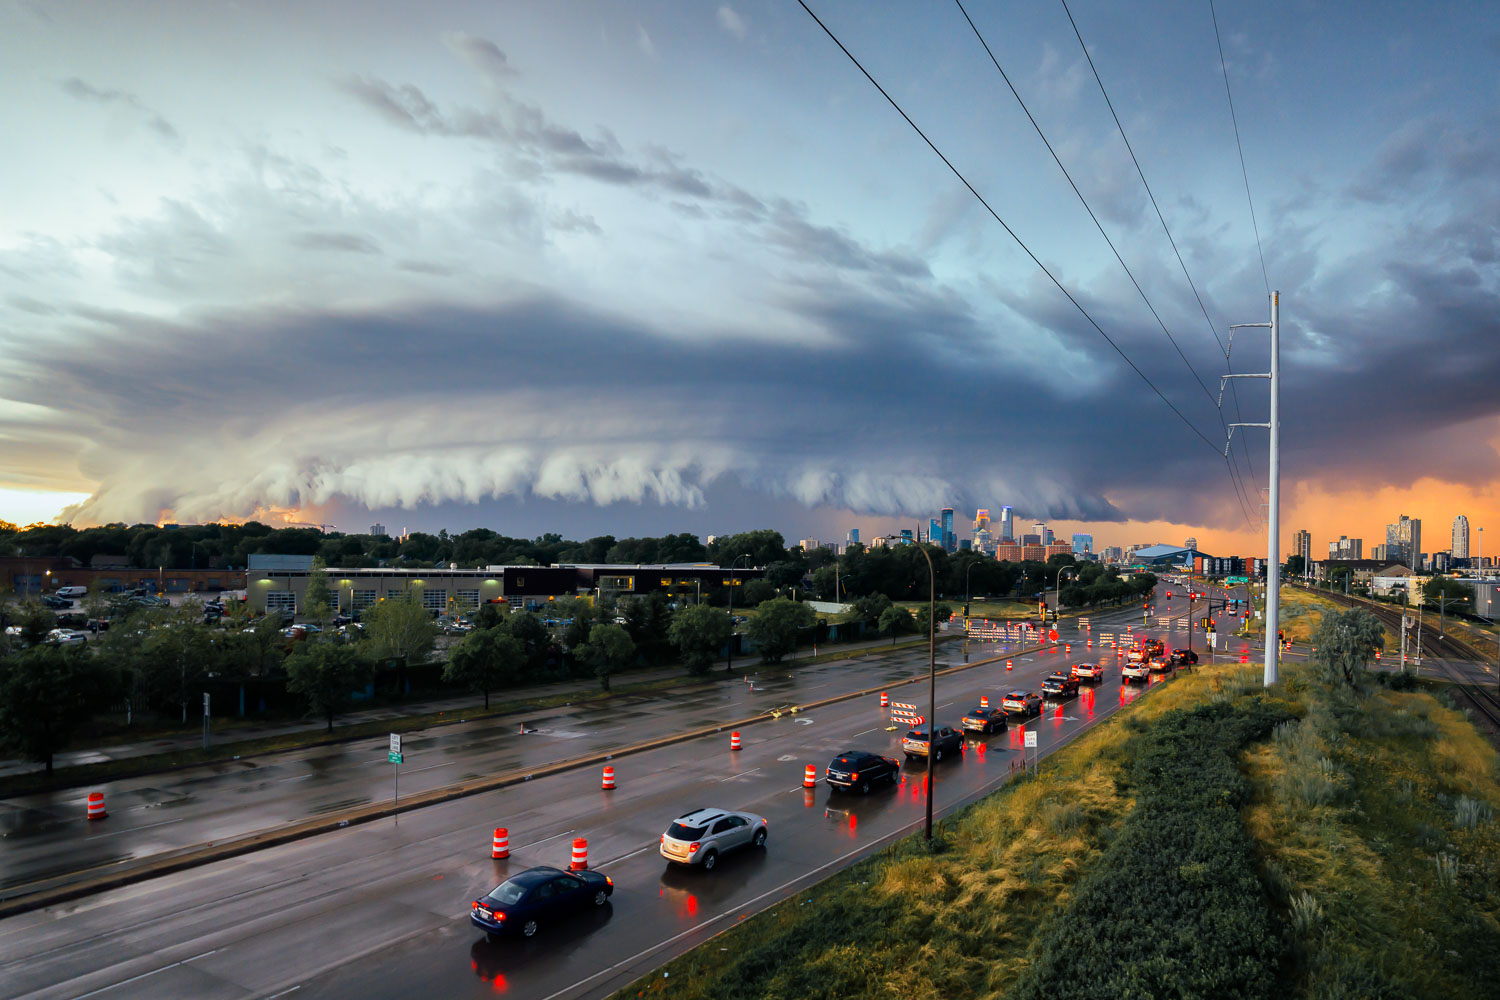 July 2022 Minneapolis Thunderstorm